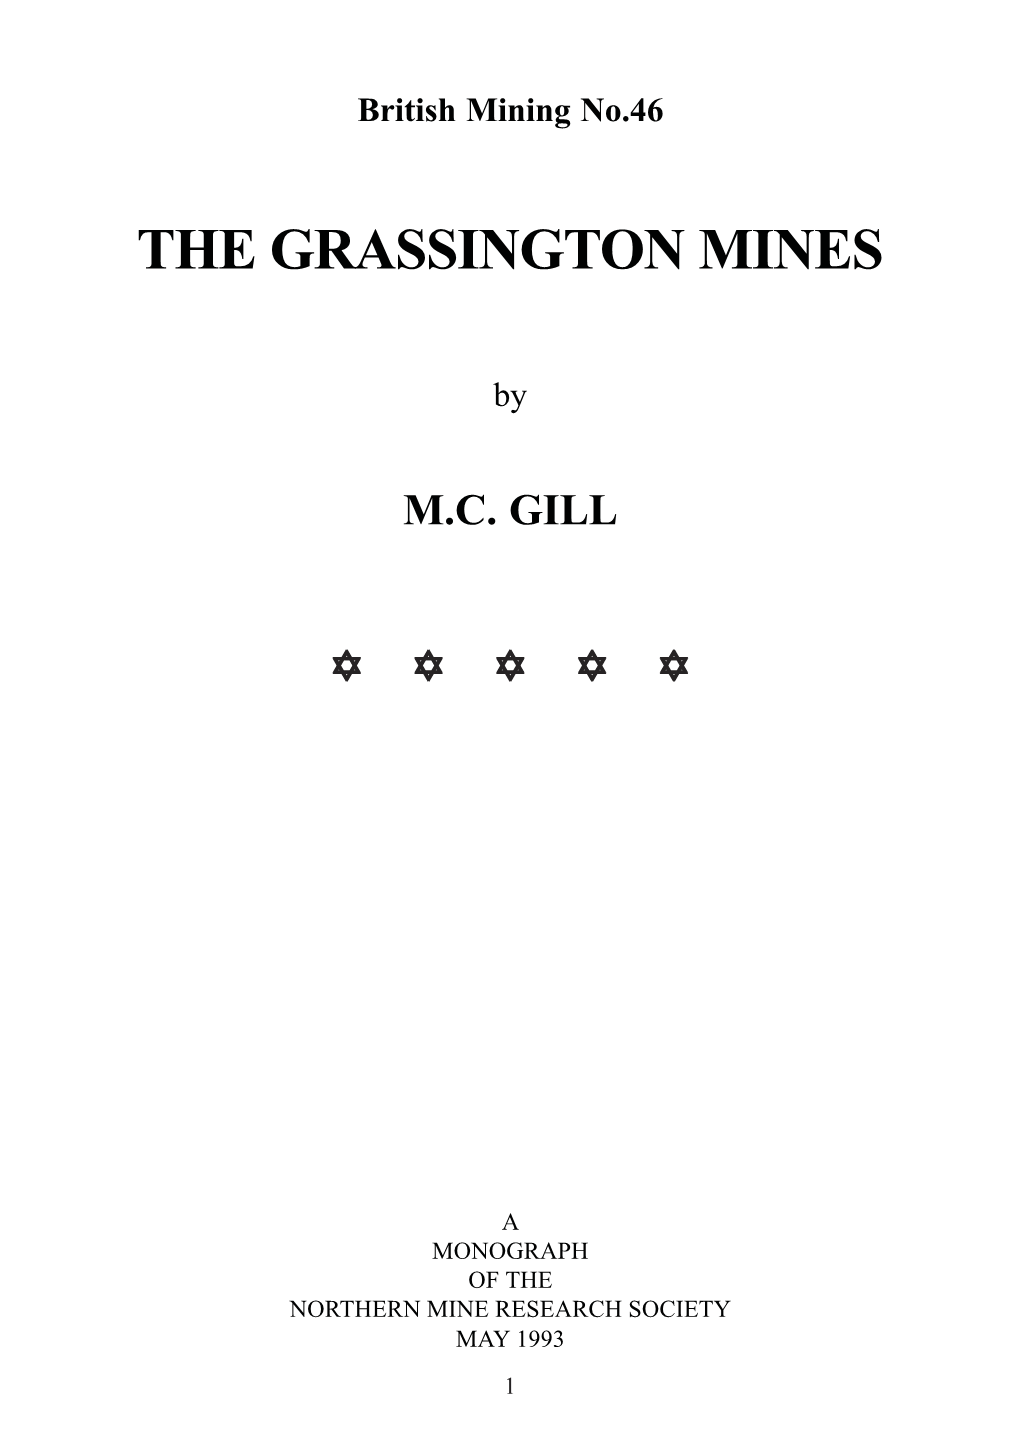 The Grassington Mines